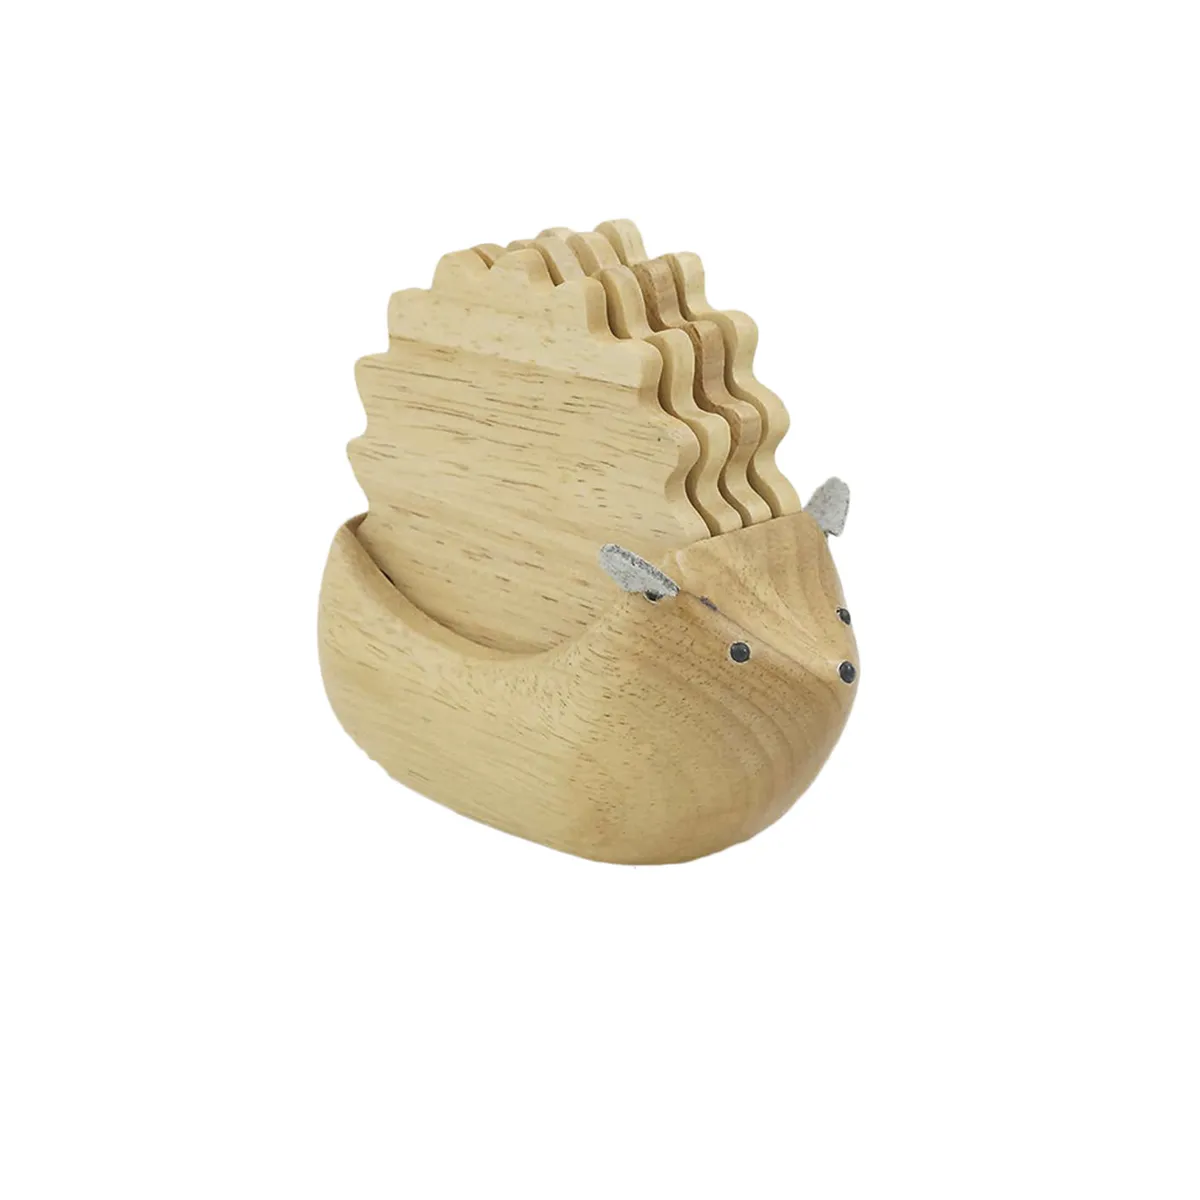 Wooden hedgehog coasters, £12 for a set of four, Dunelm